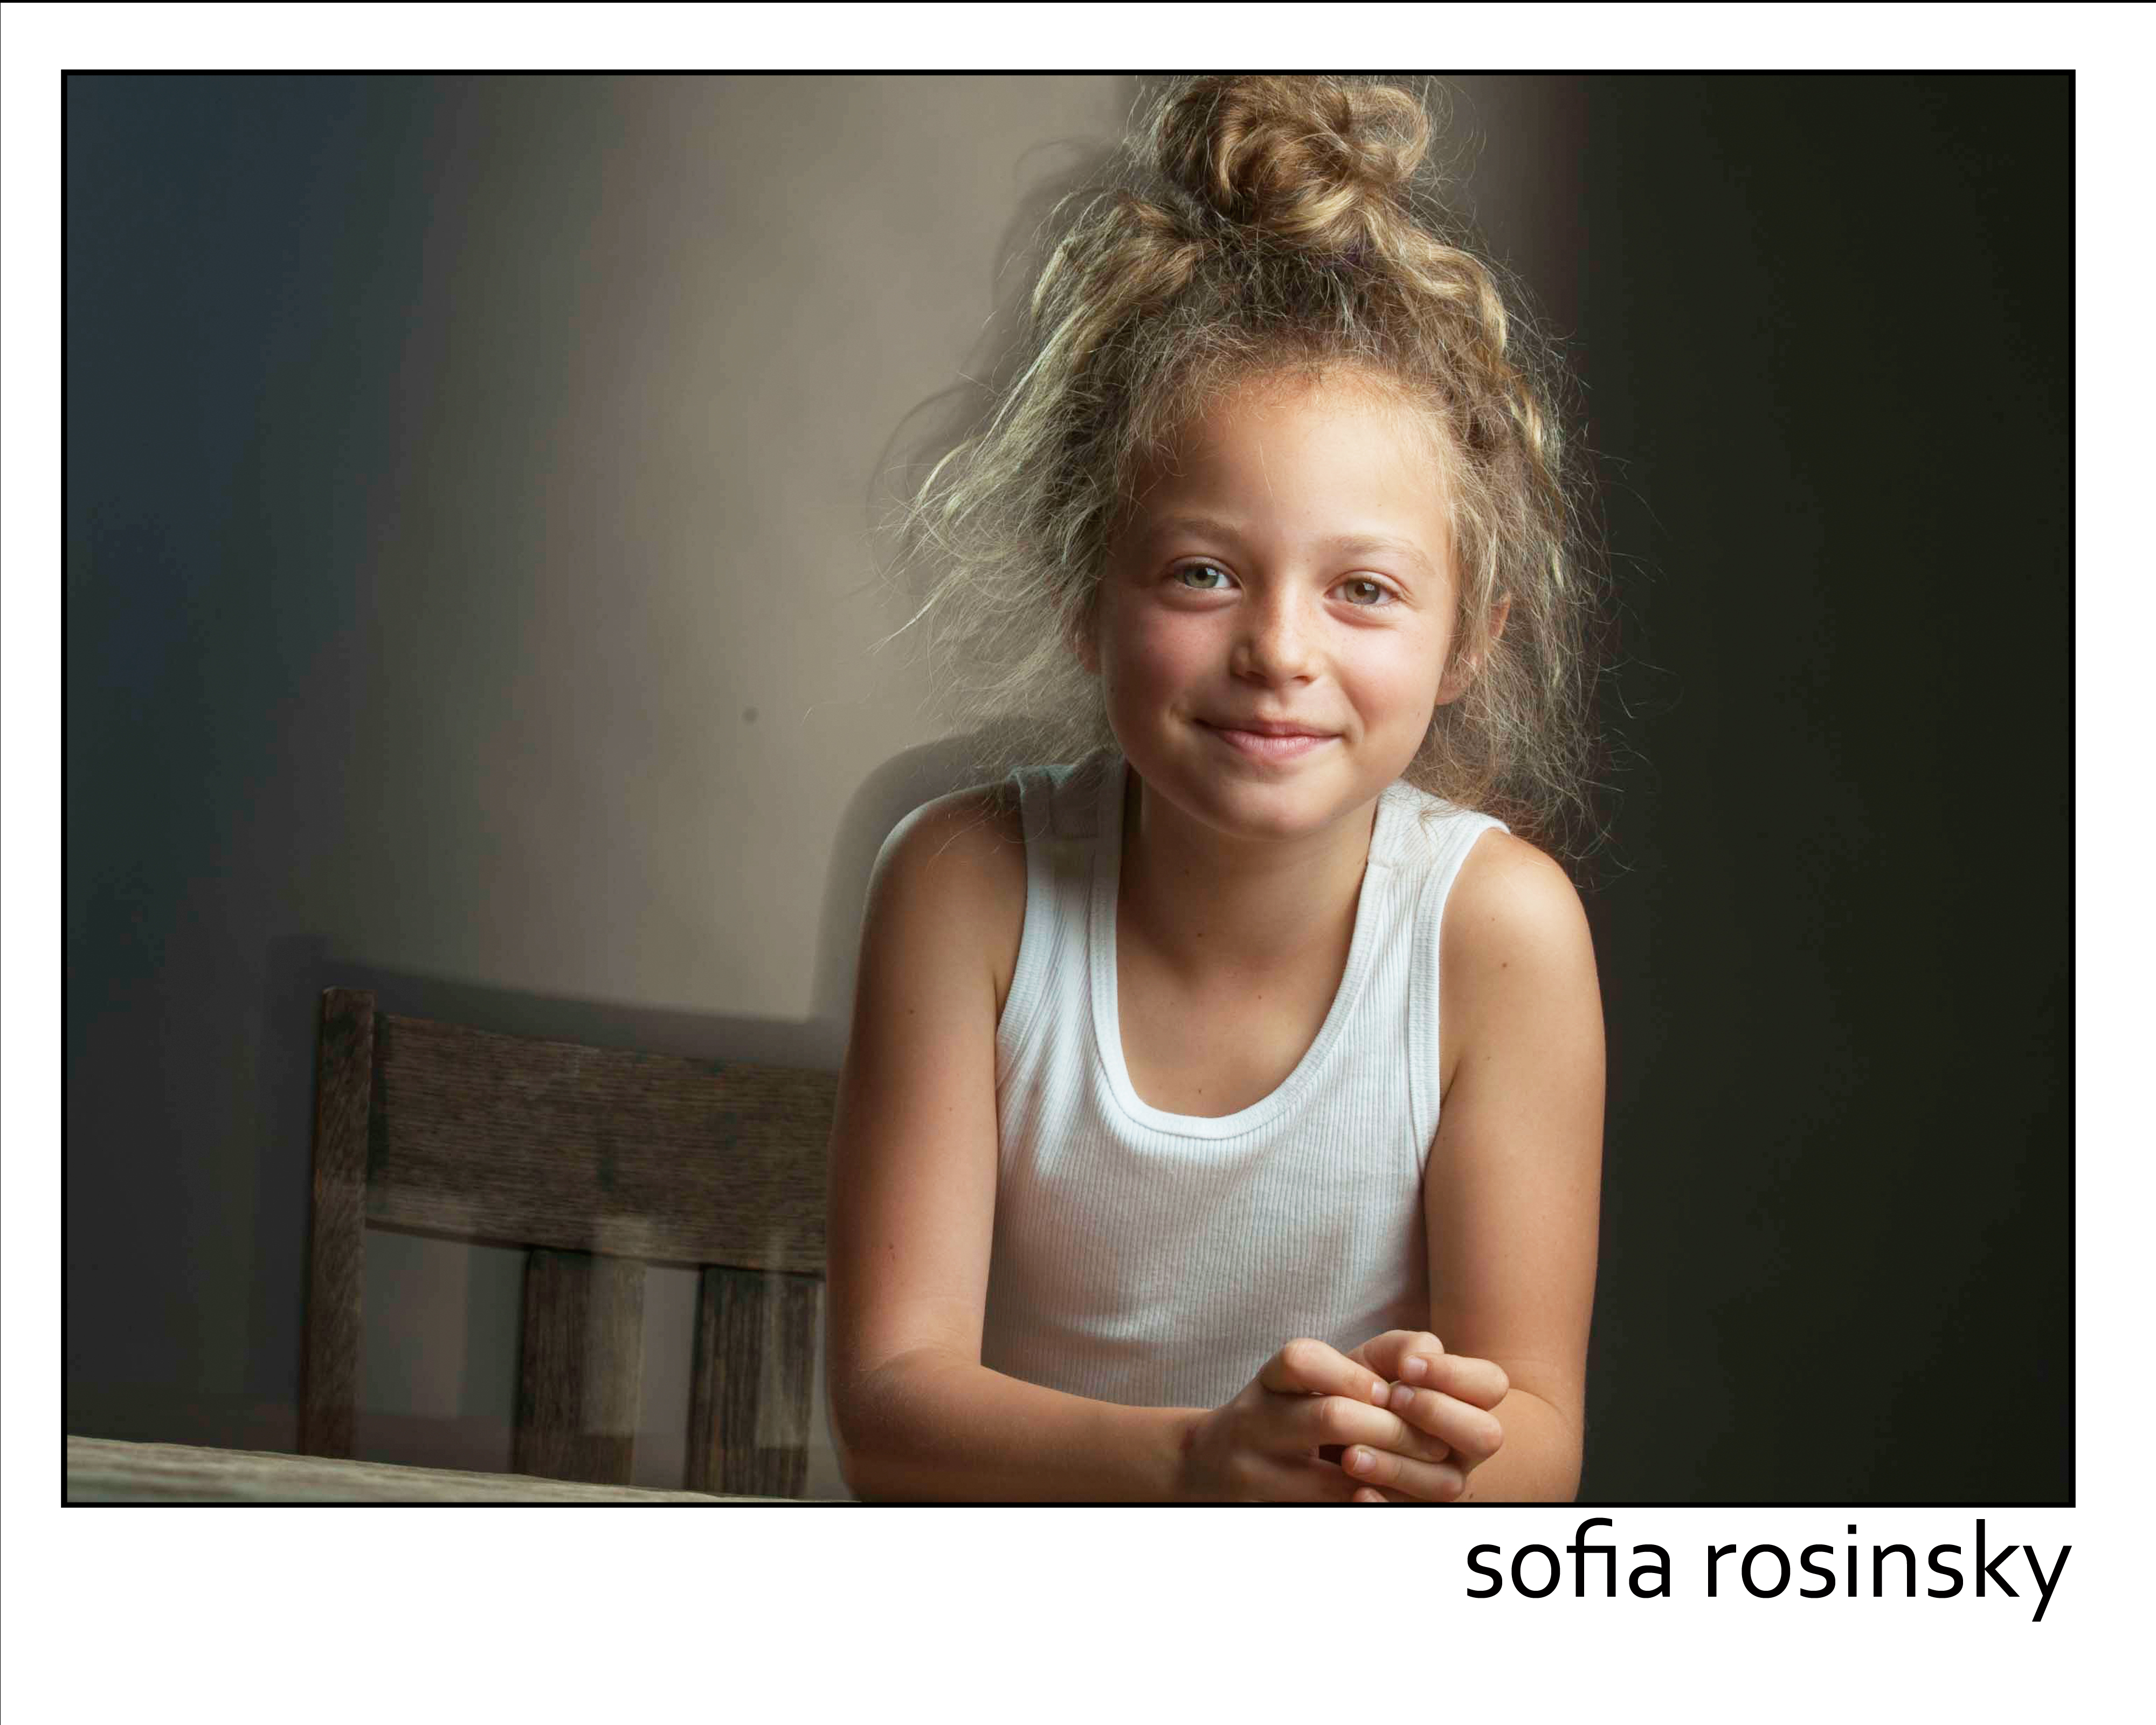 Sofia Rosinsky photographed by Vern Evans